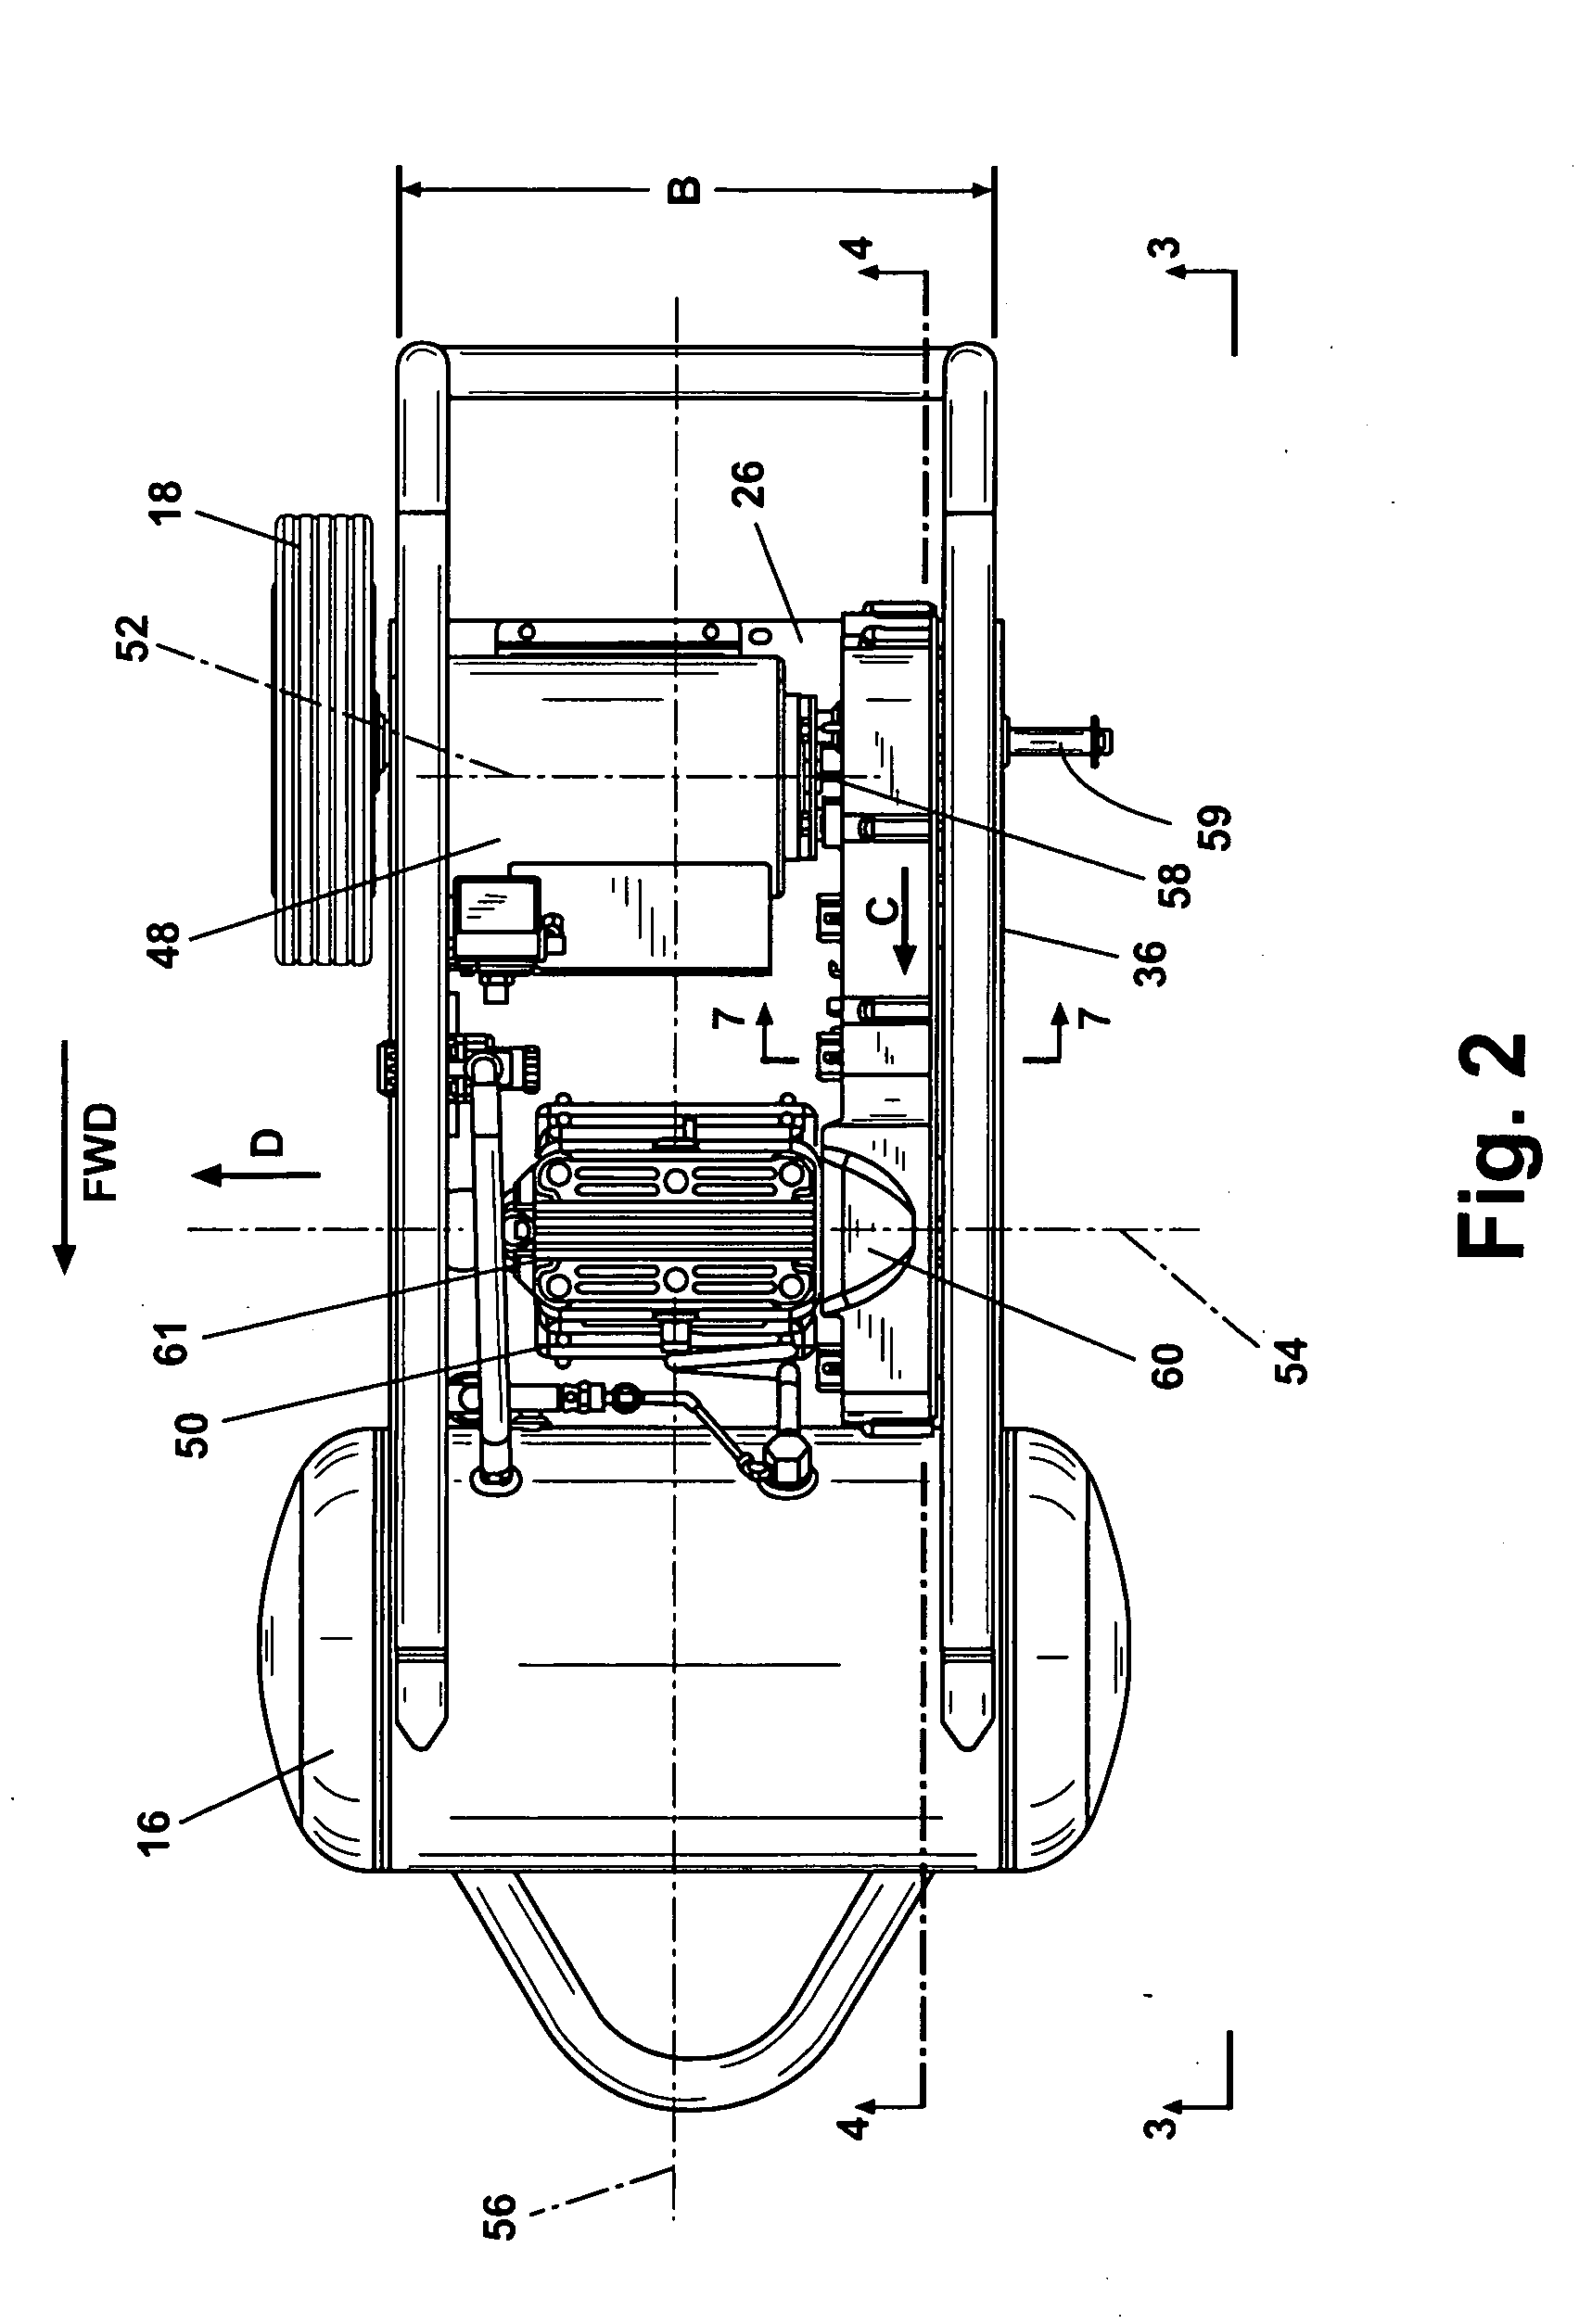 Cooling arrangement for a portable air compressor